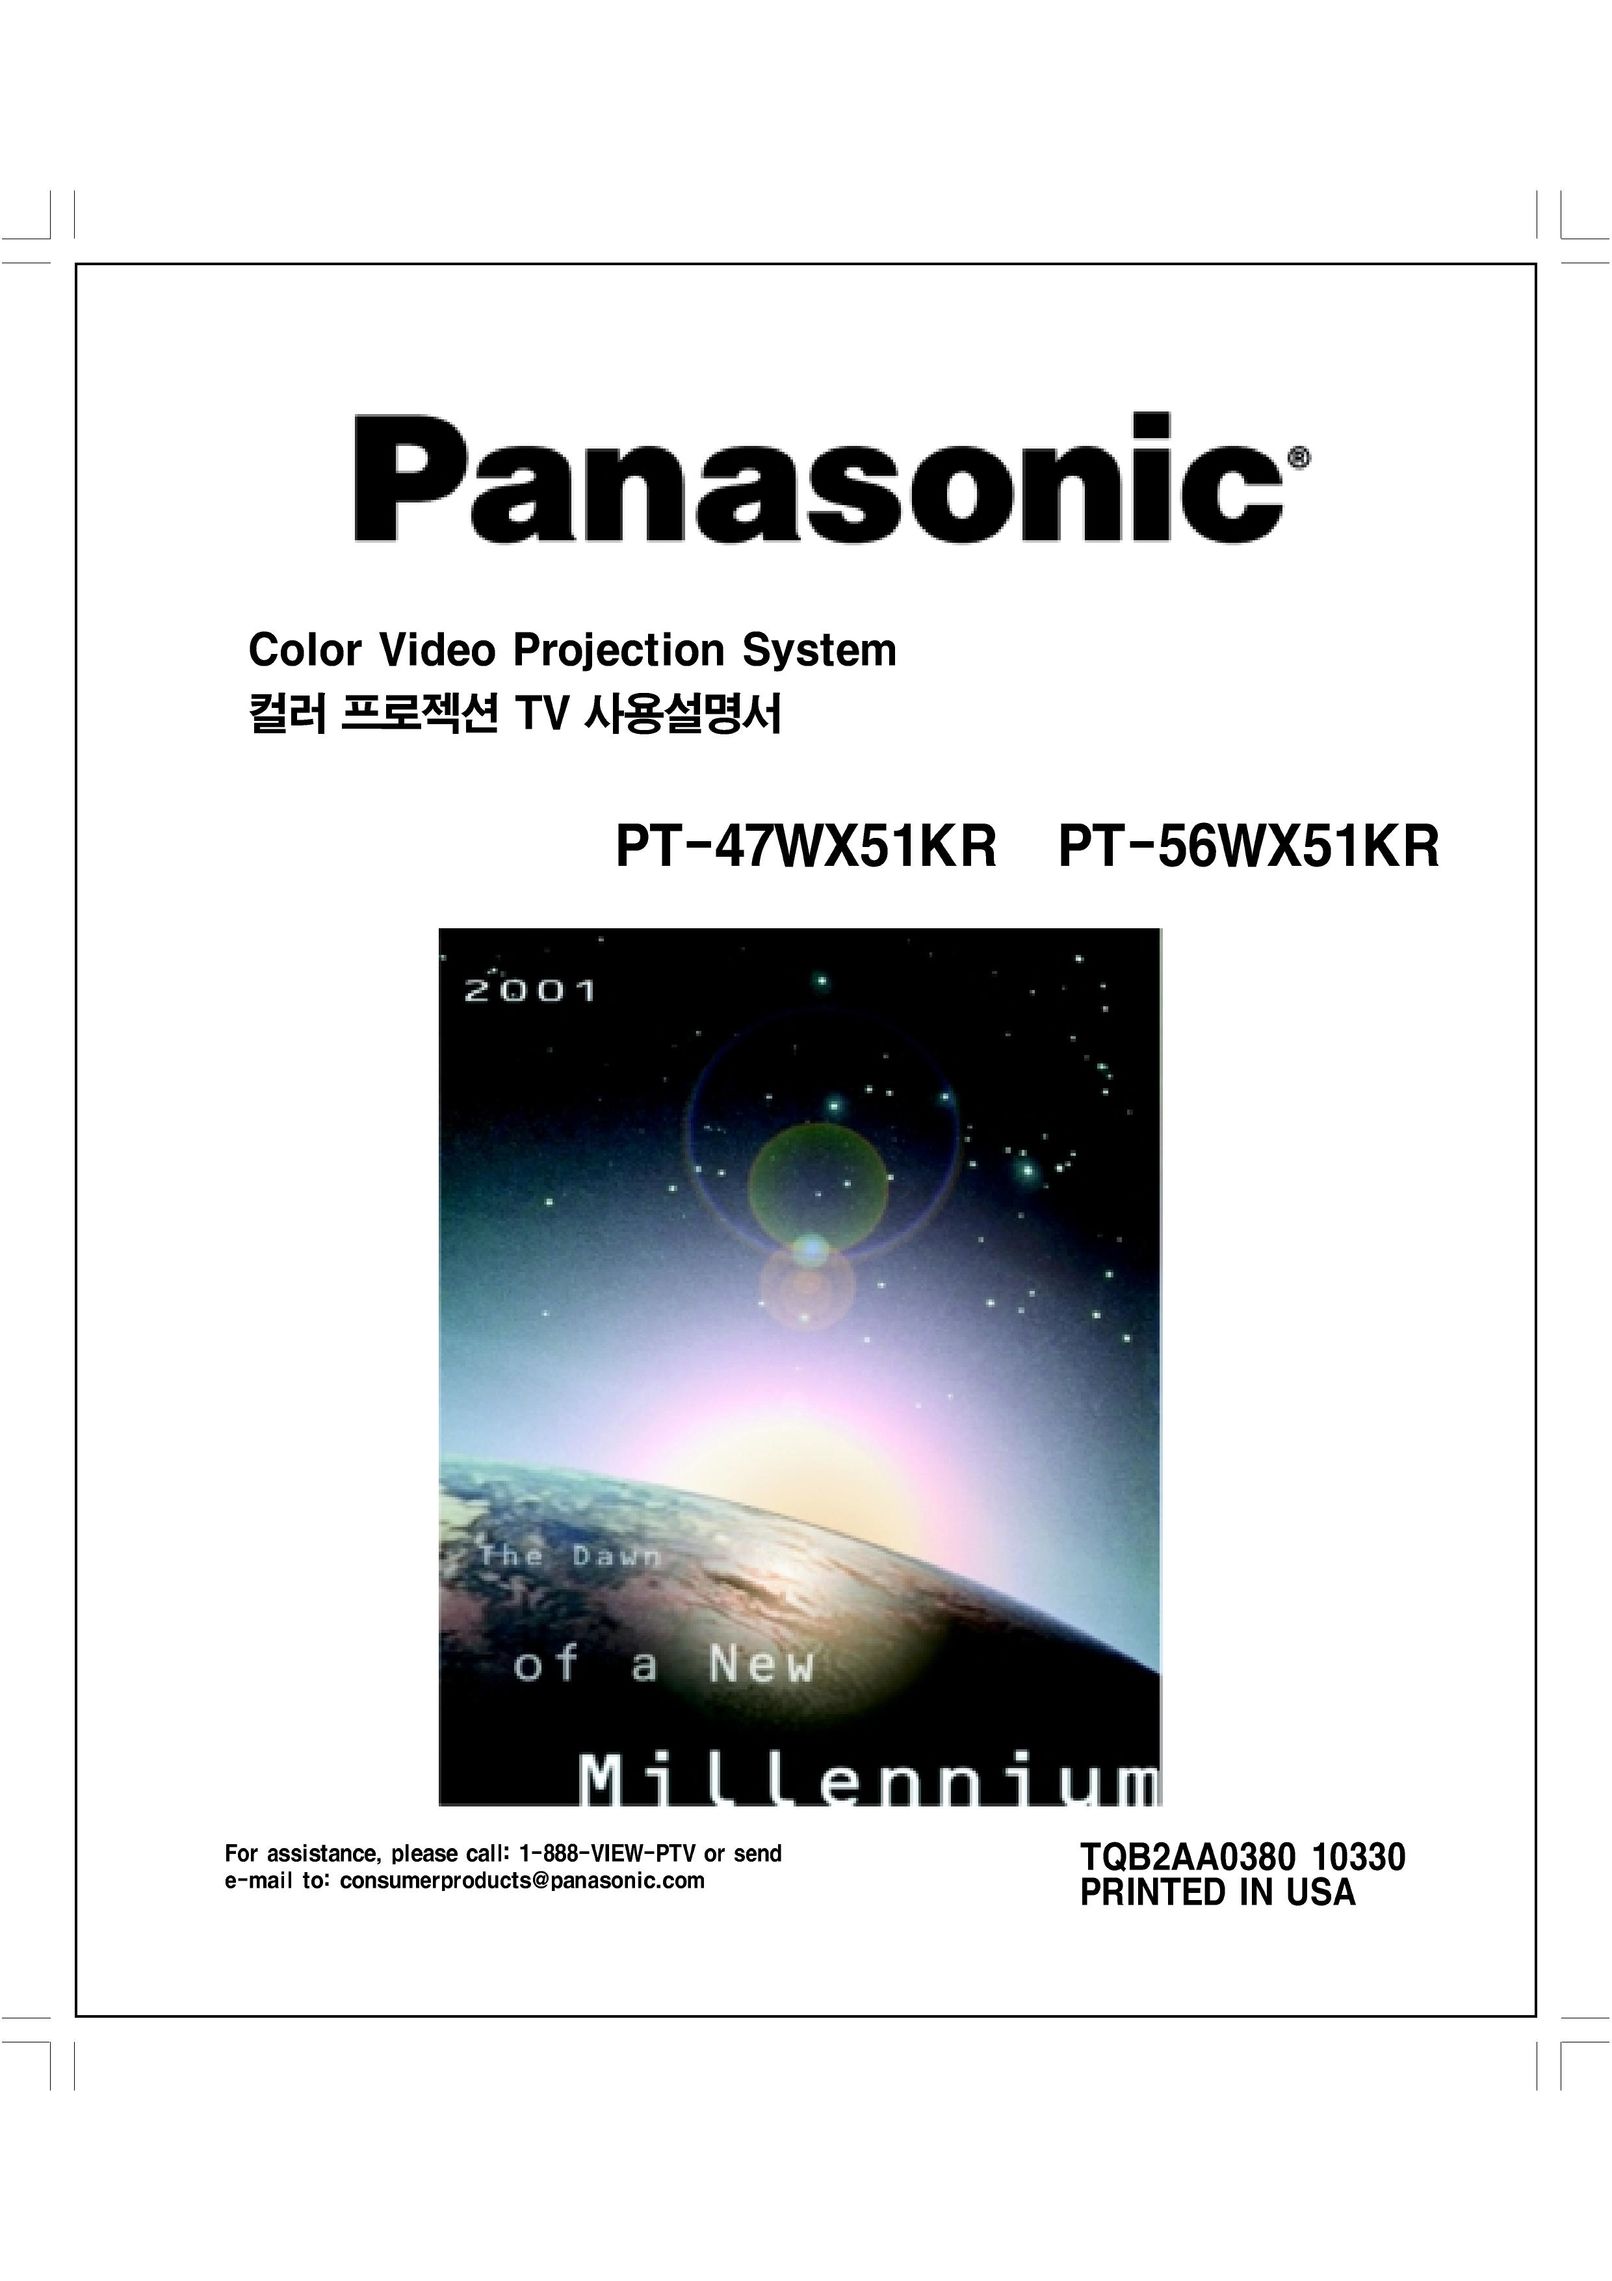 Panasonic PT-56WX51KR Projector User Manual